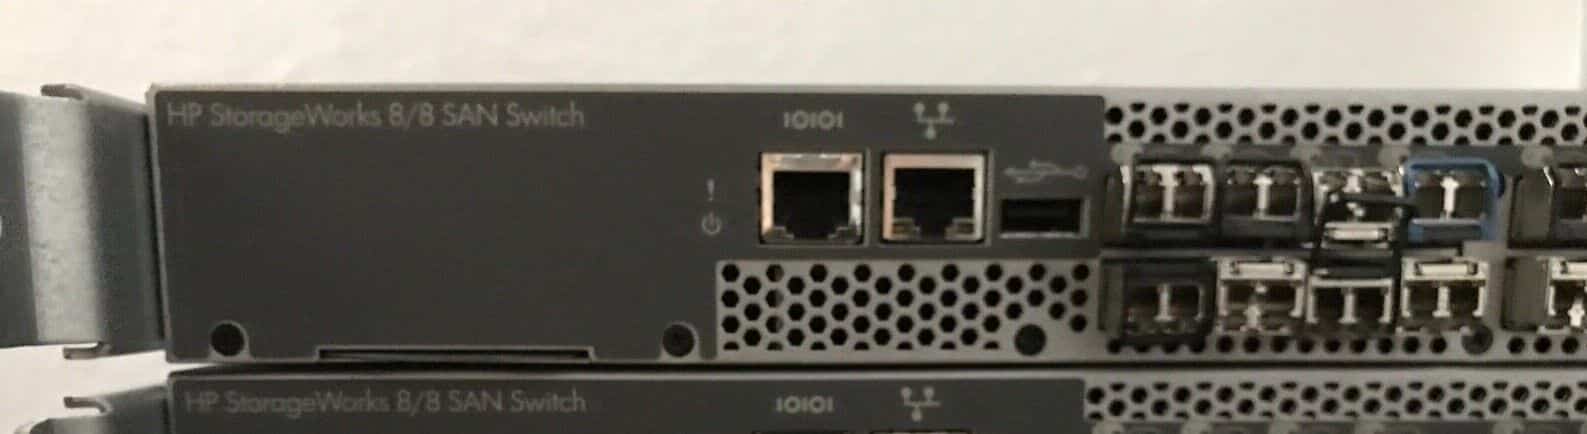 HP-StorageWorks-88-SAN-Switch-AM867B-Silkworm-4900-175346904754.jpg